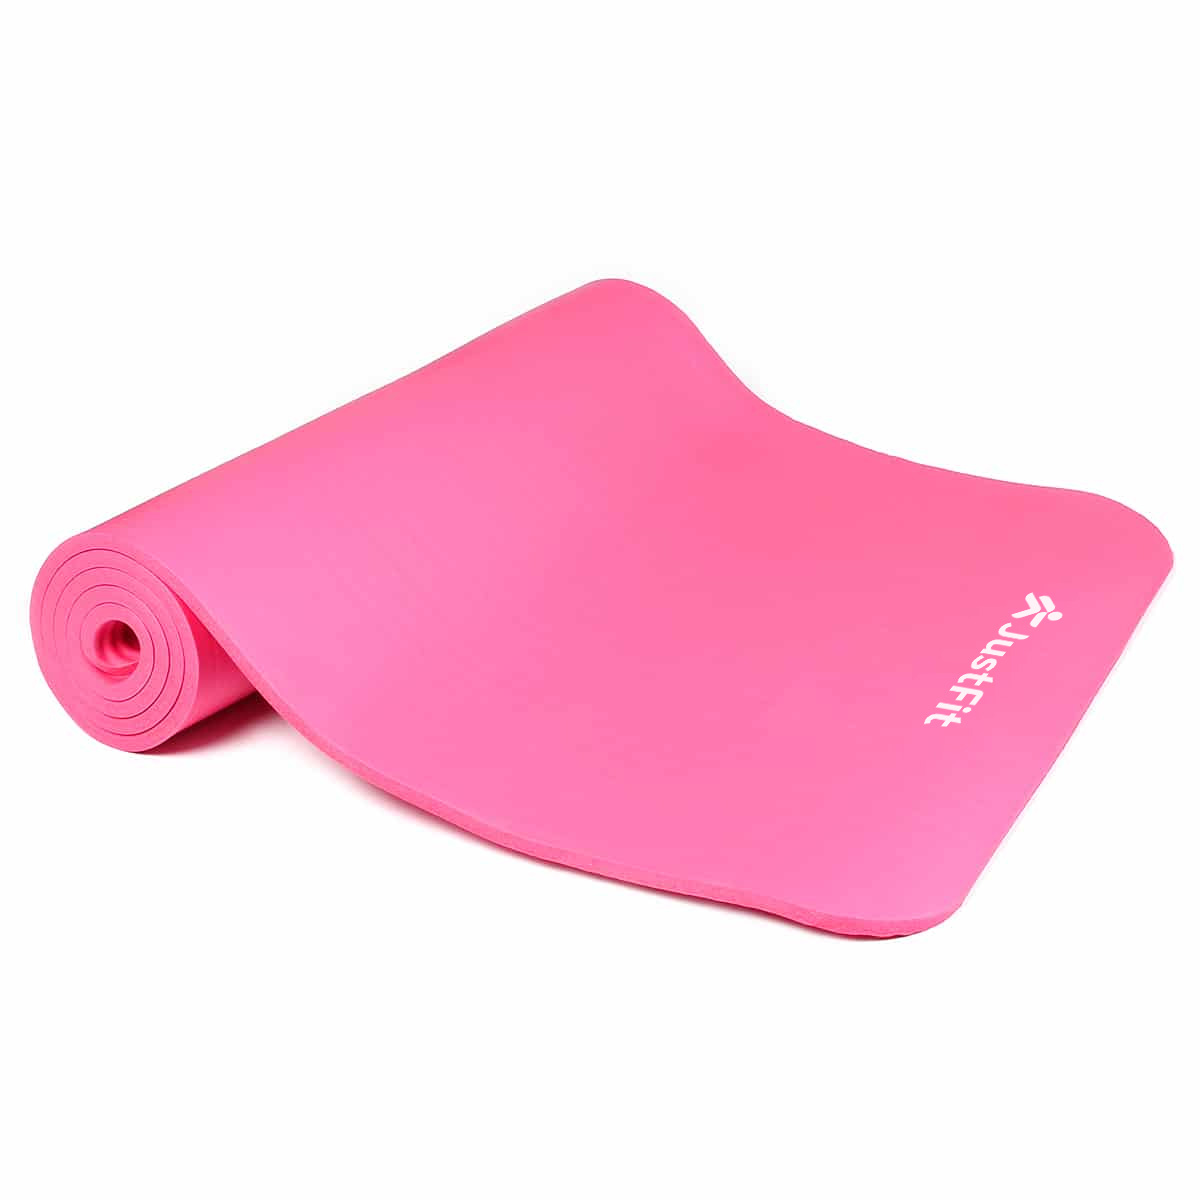 Esterilla De Yoga Con Espuma Antideslizante Gladiatorfit 180x60x1cm - rosa - 